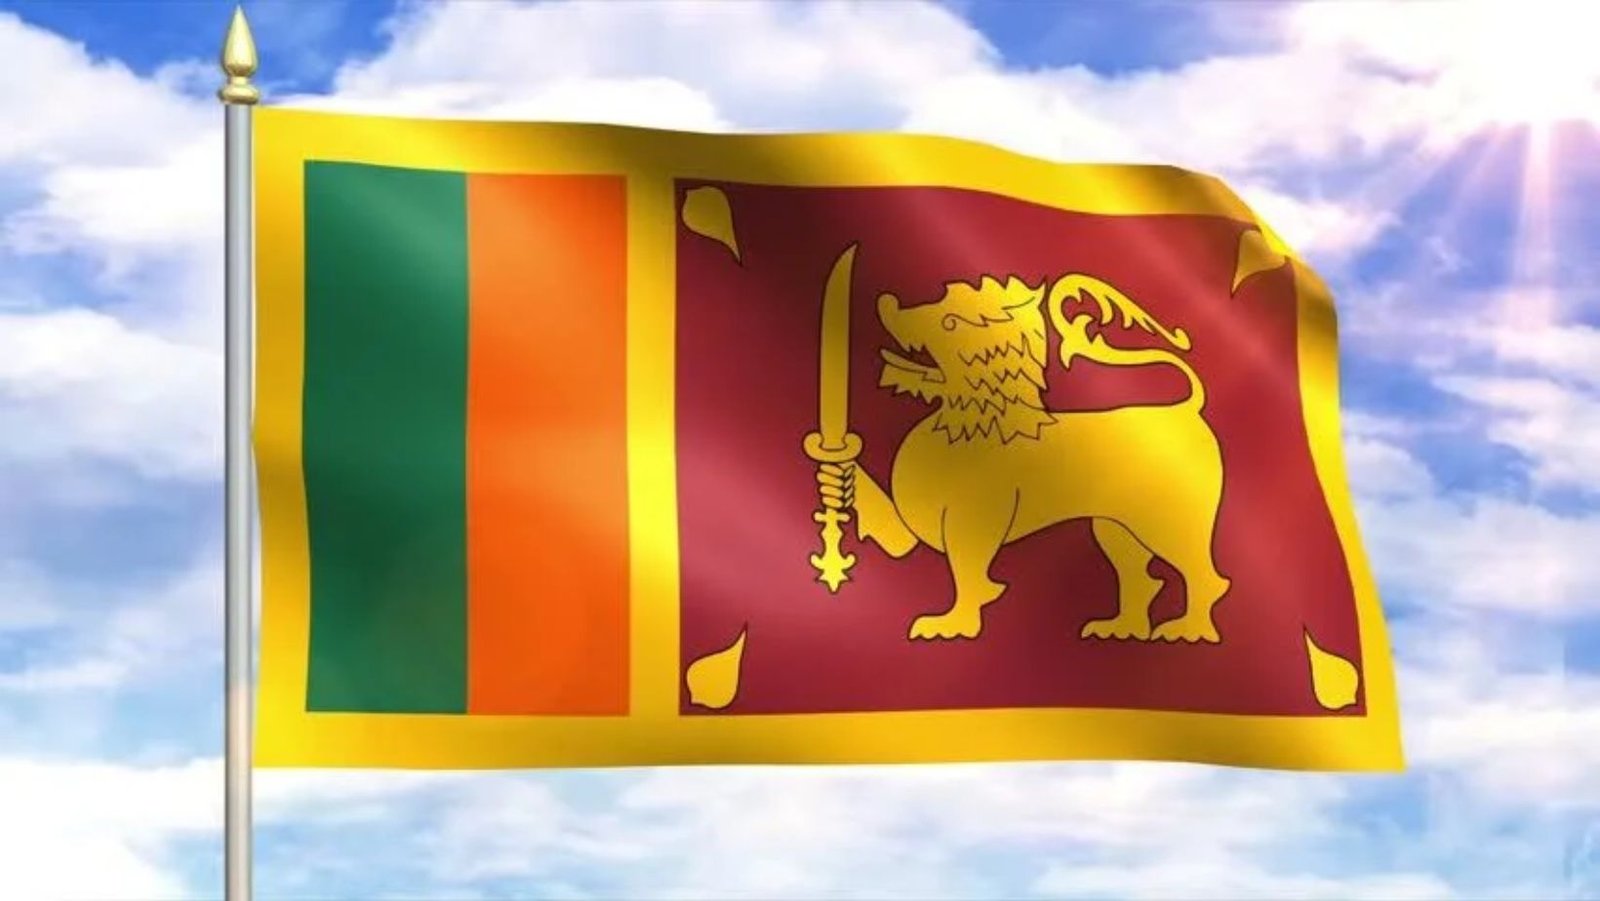 President's office to reopen in Sri Lanka following crackdown